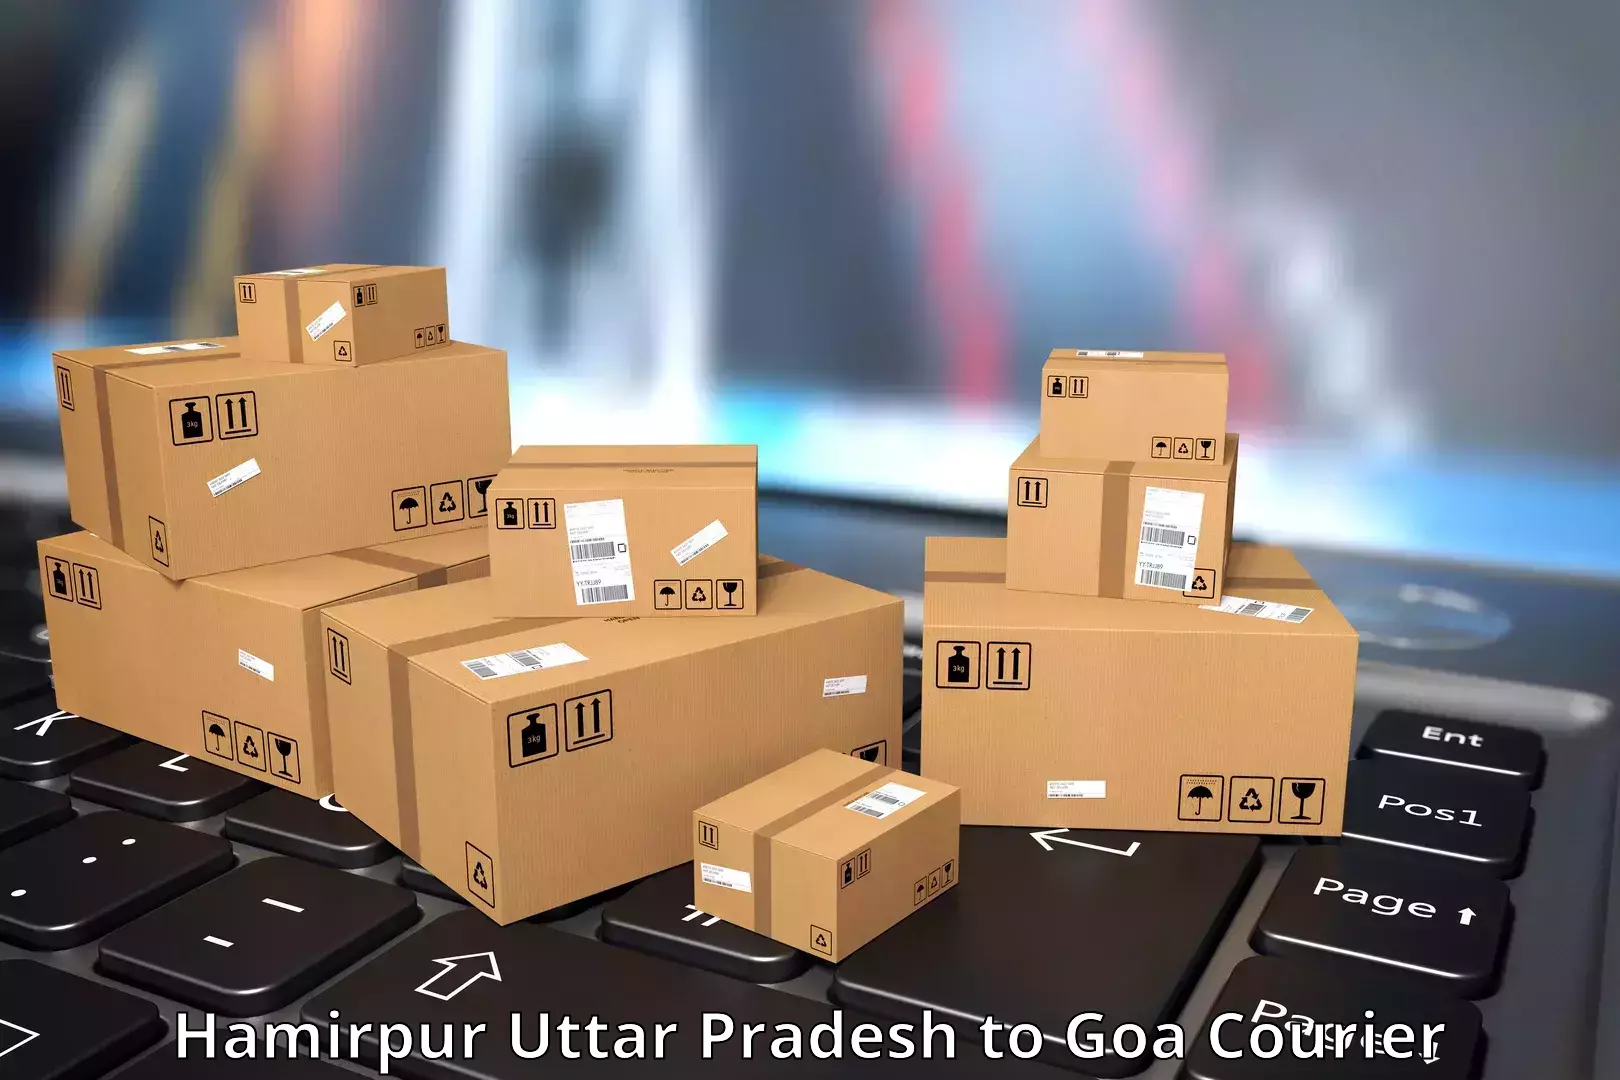 Domestic courier Hamirpur Uttar Pradesh to South Goa